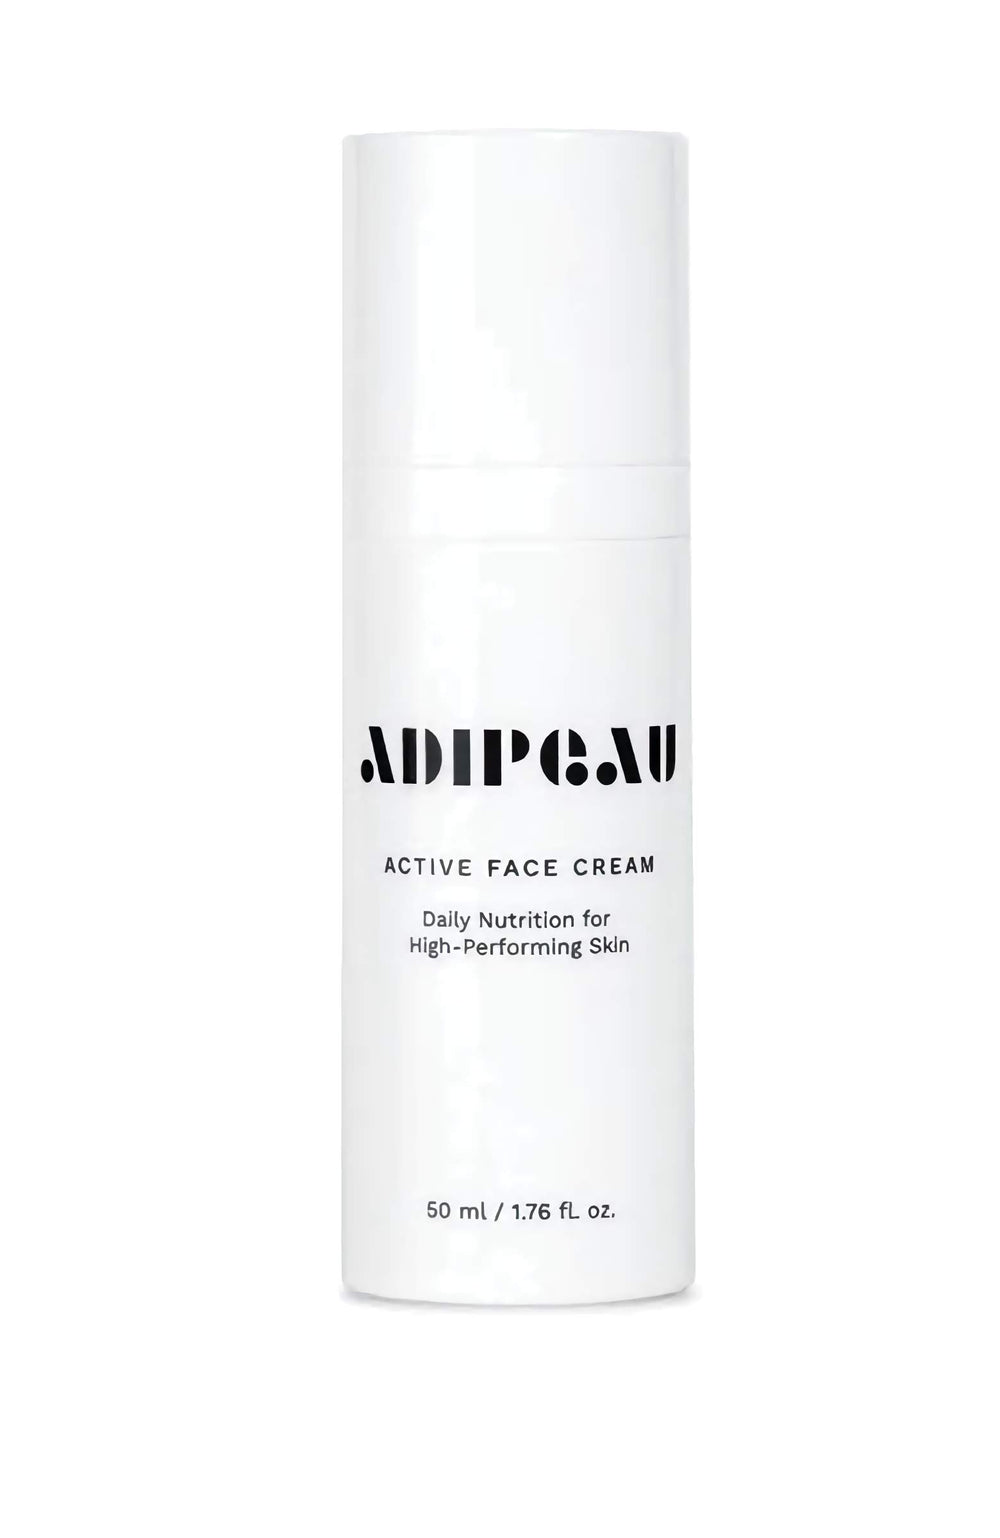 ADIPEAU - Active Face Cream